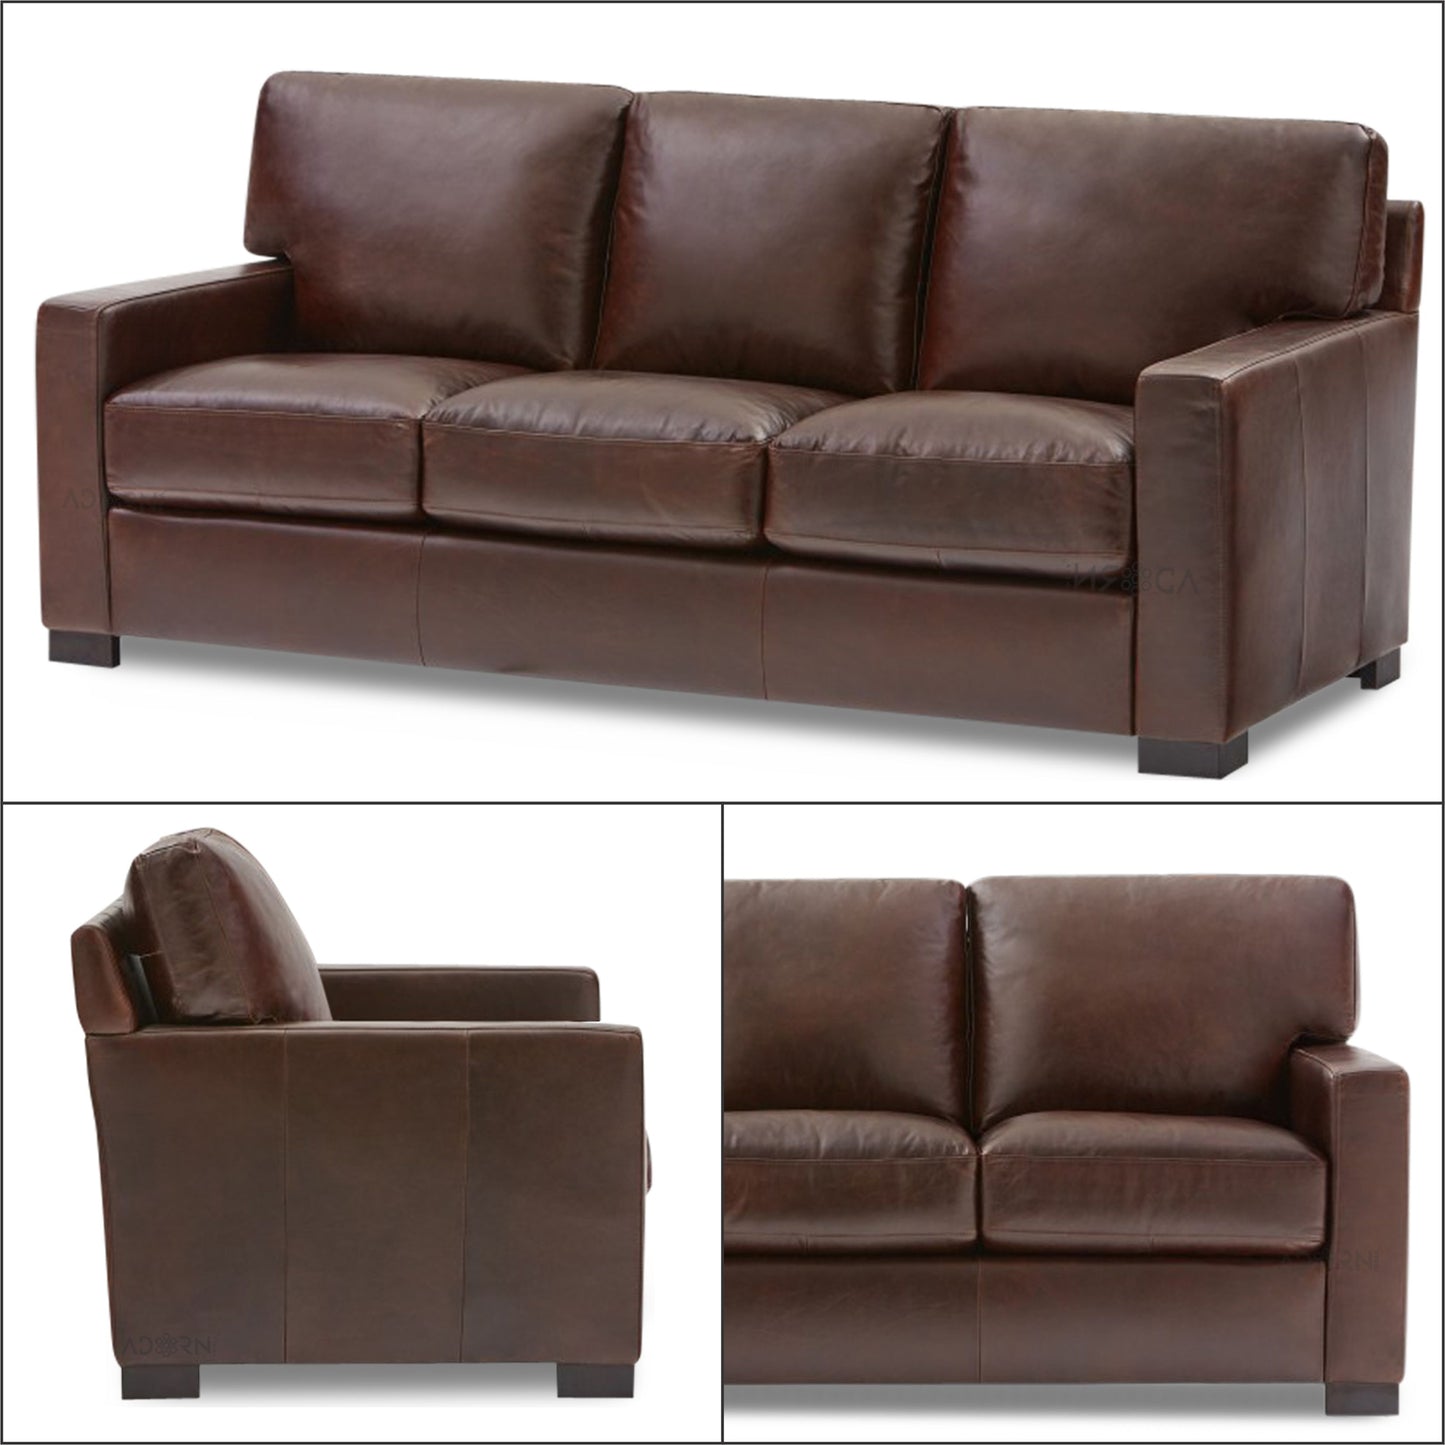 Adorn India Exclusive Rosina Leatherette Three Seater Sofa (Light Brown)